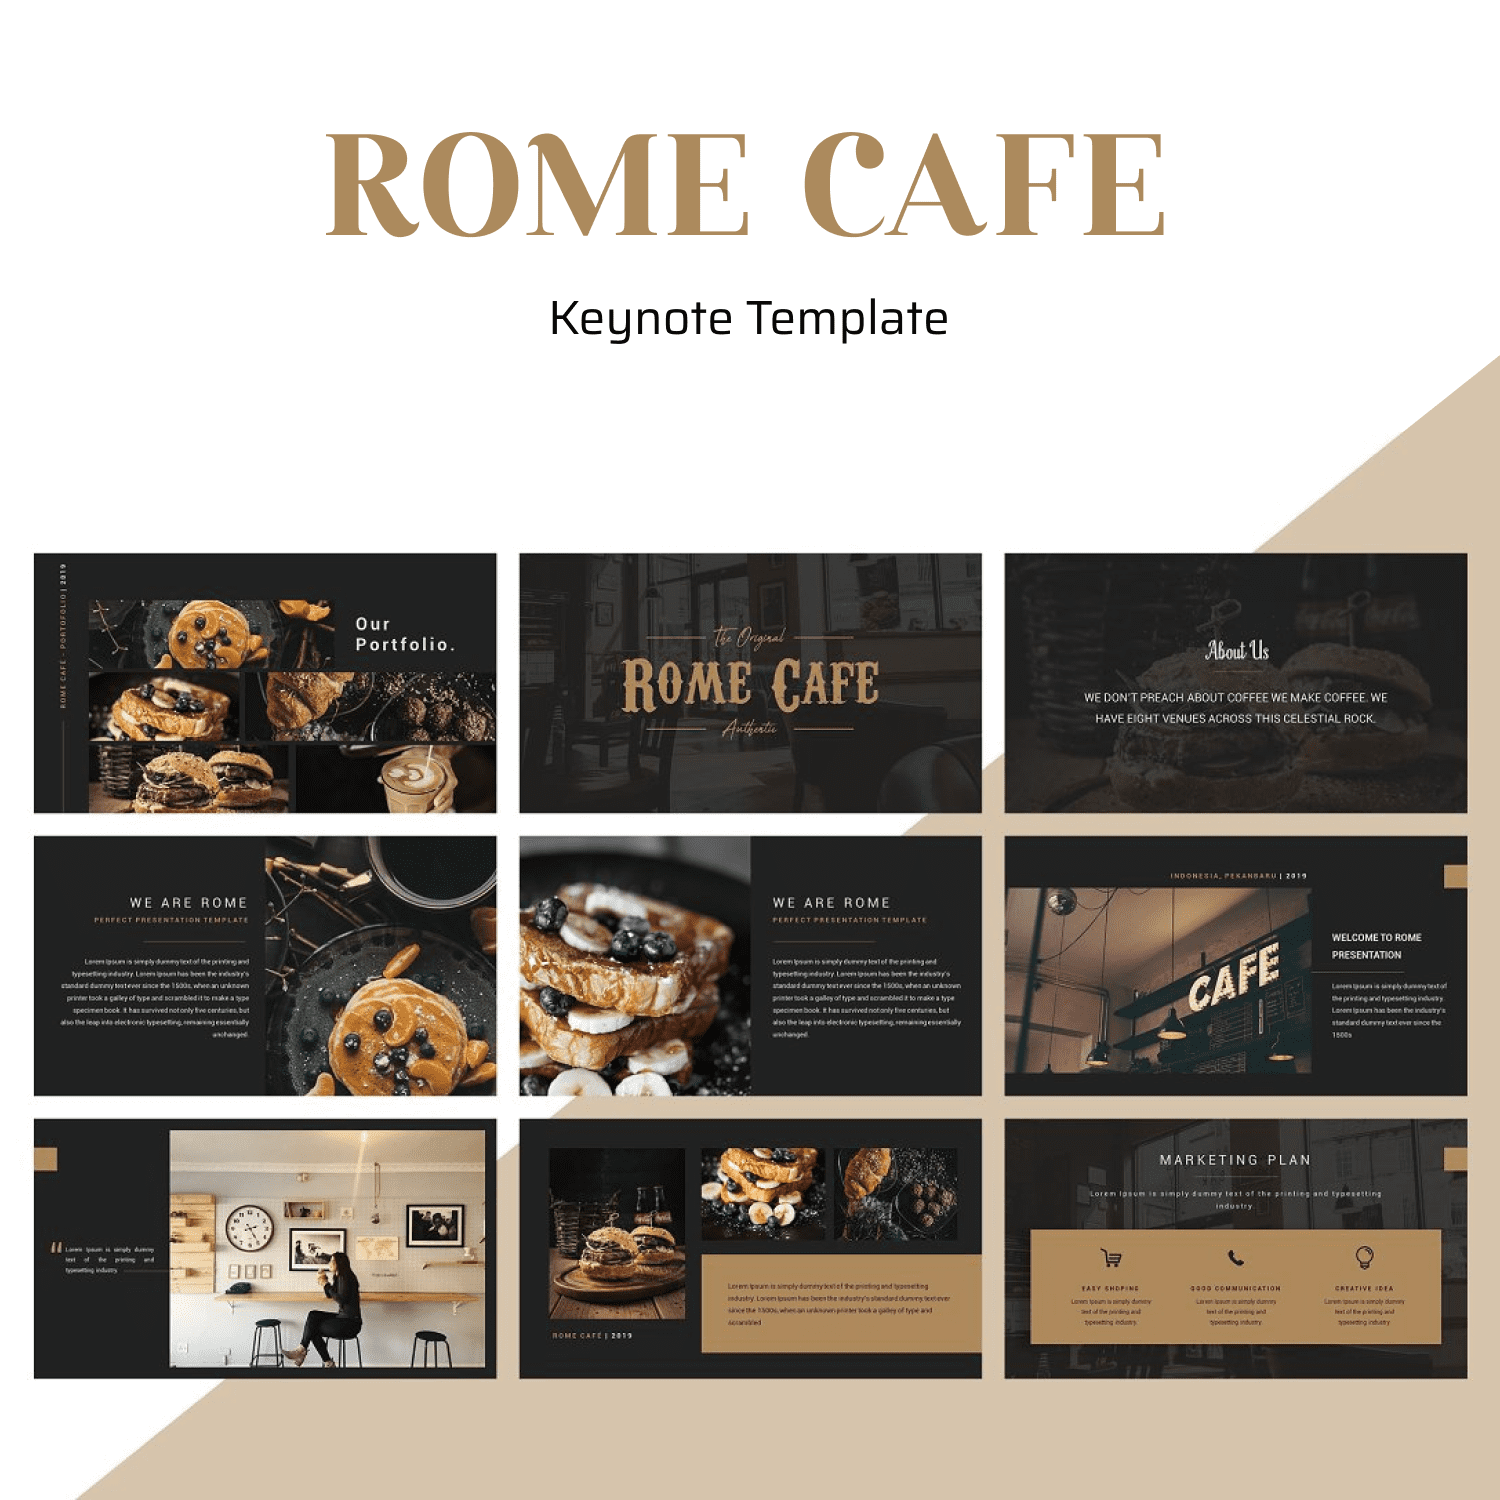 Rome Cafe - Keynote Template.